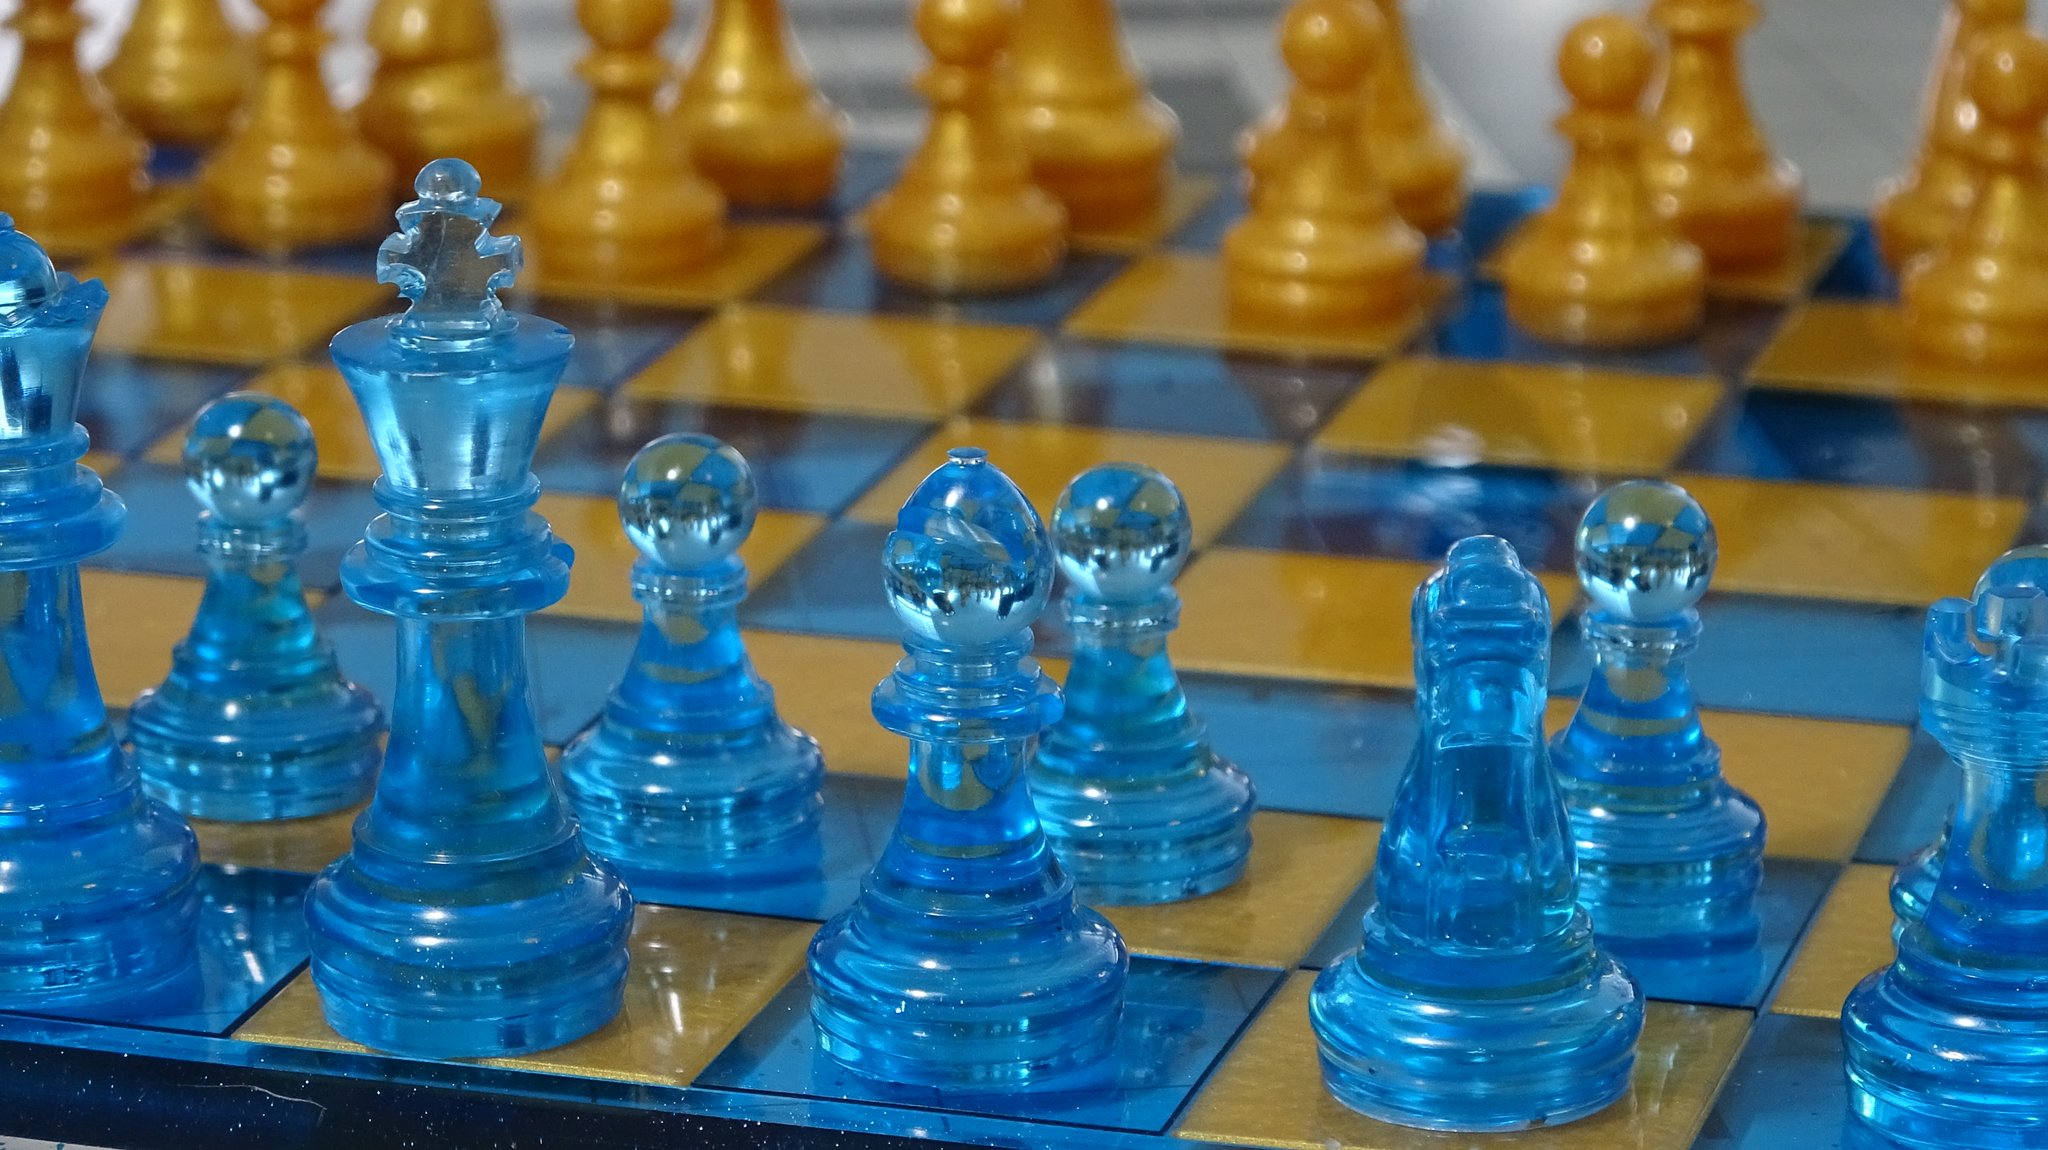 Chess Board, Translucent, Resin Handmade